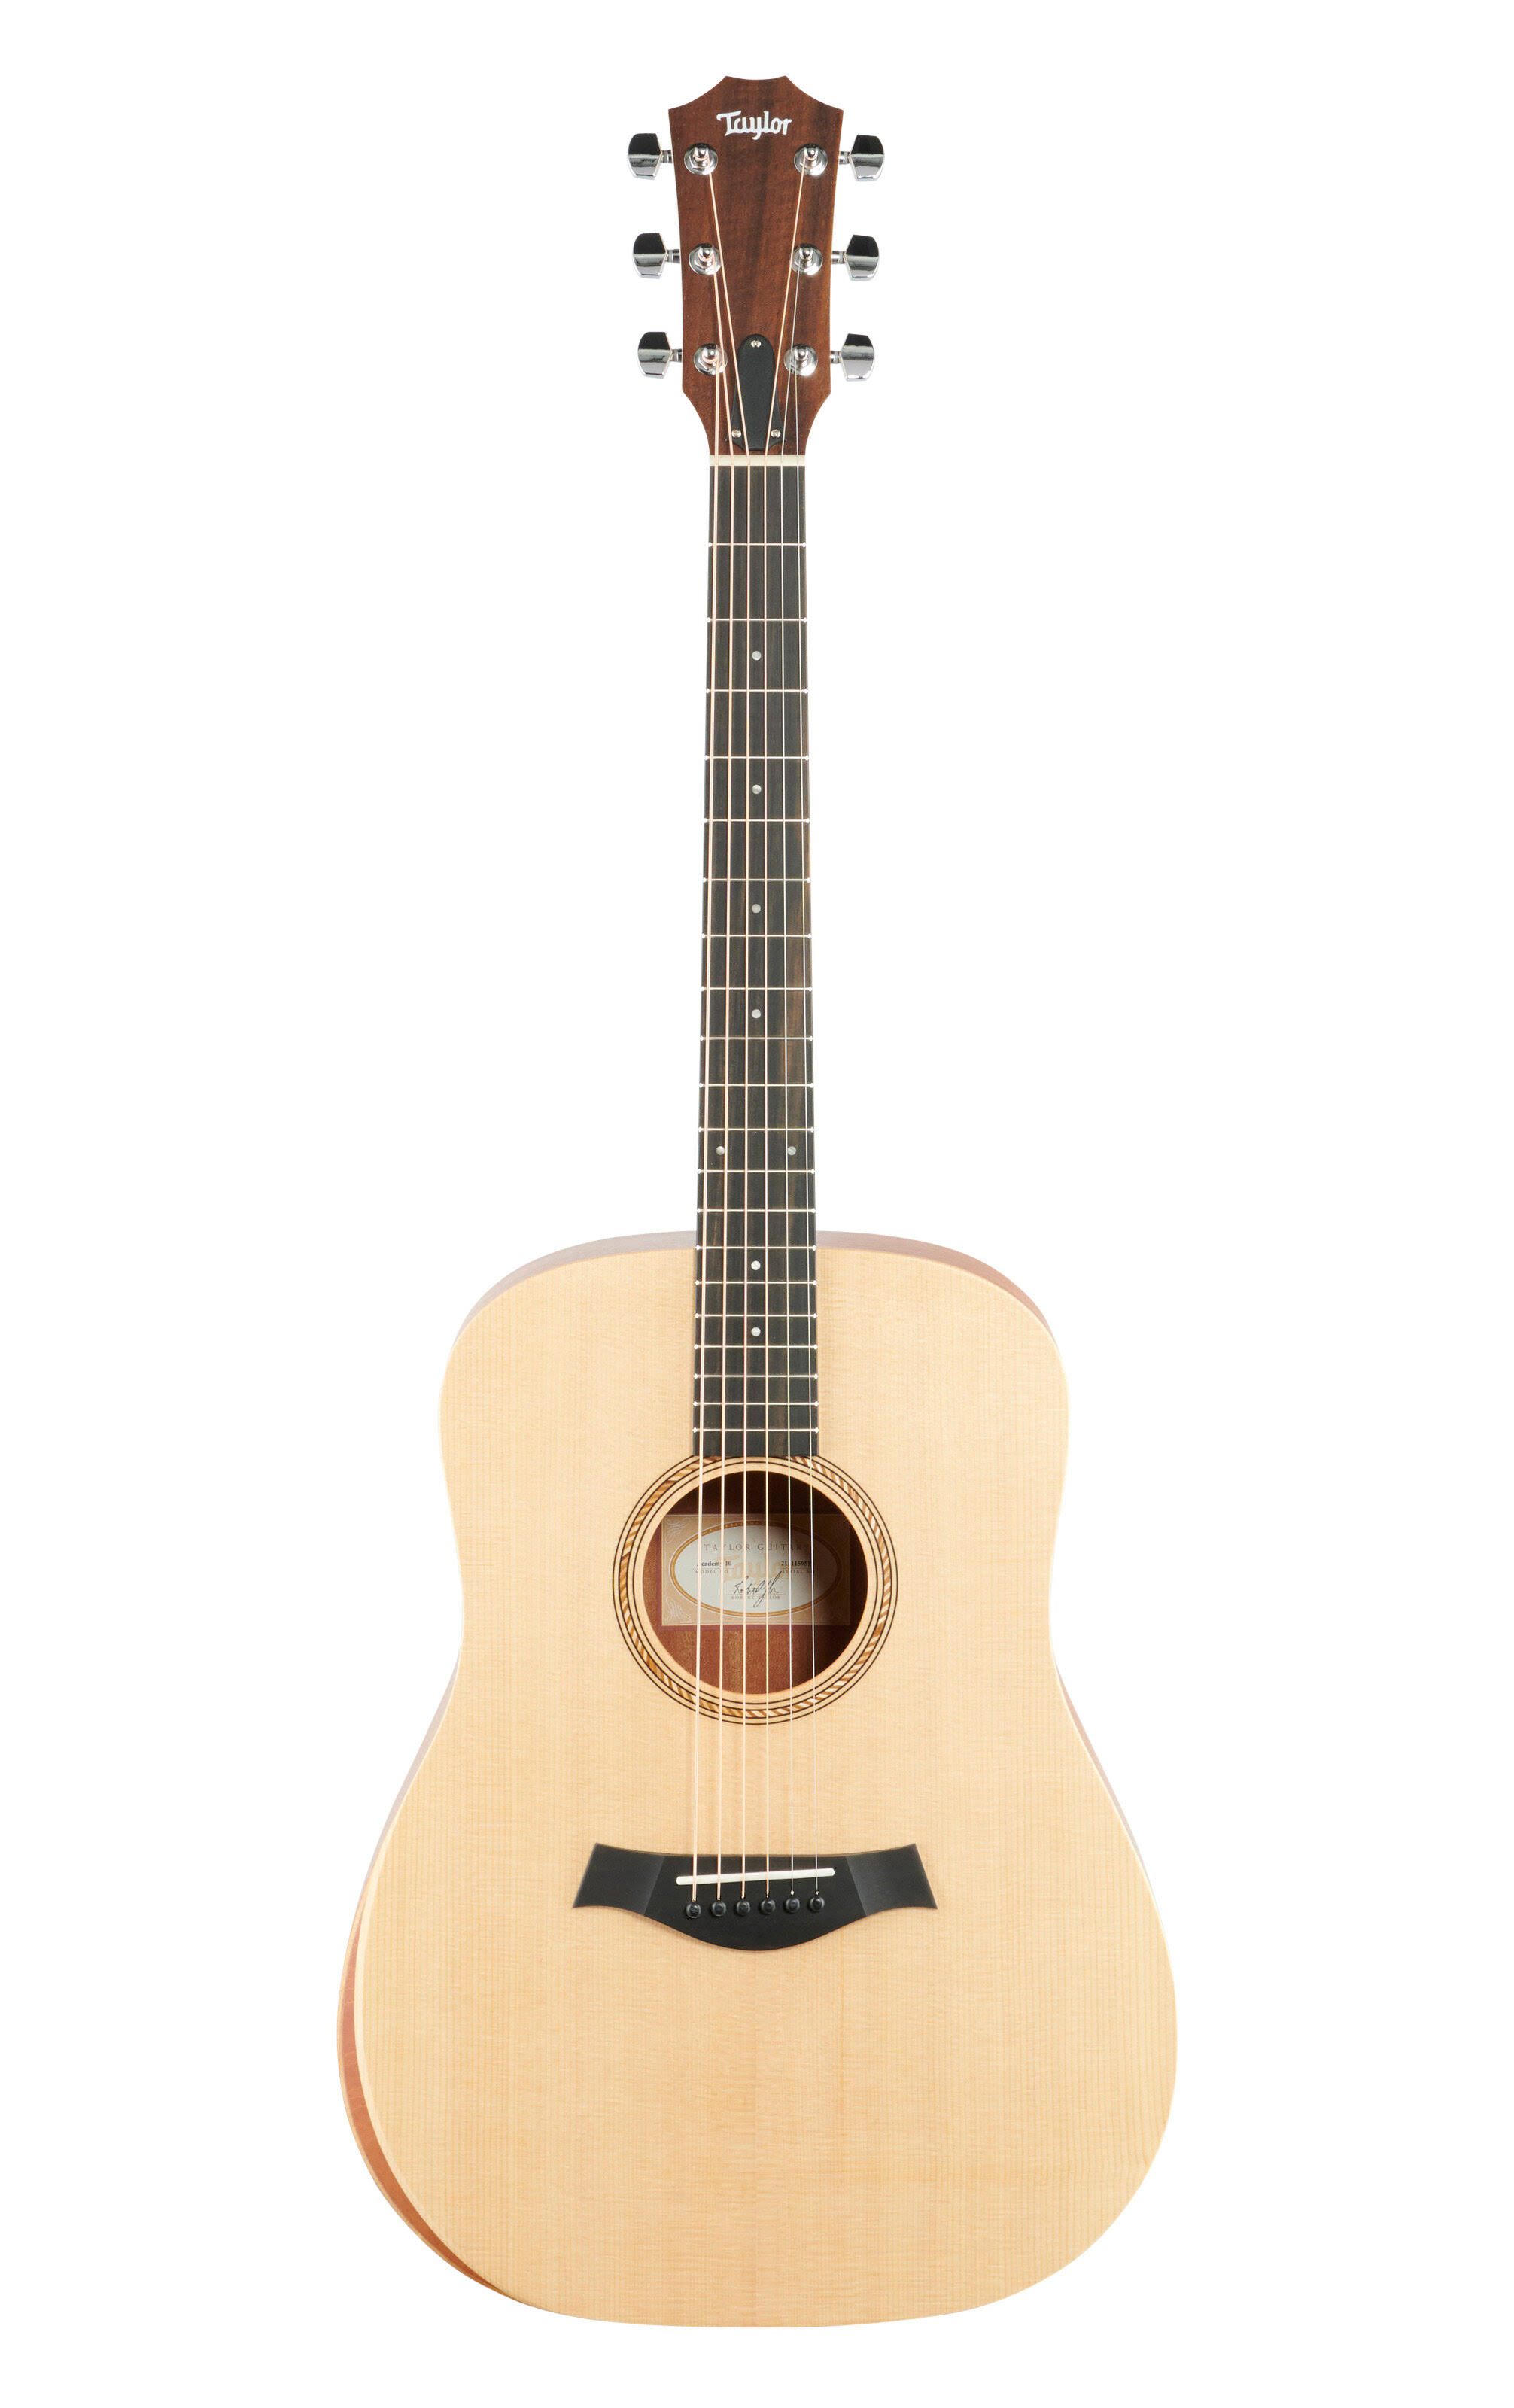 Taylor Academy 10 Acoustic Guitar